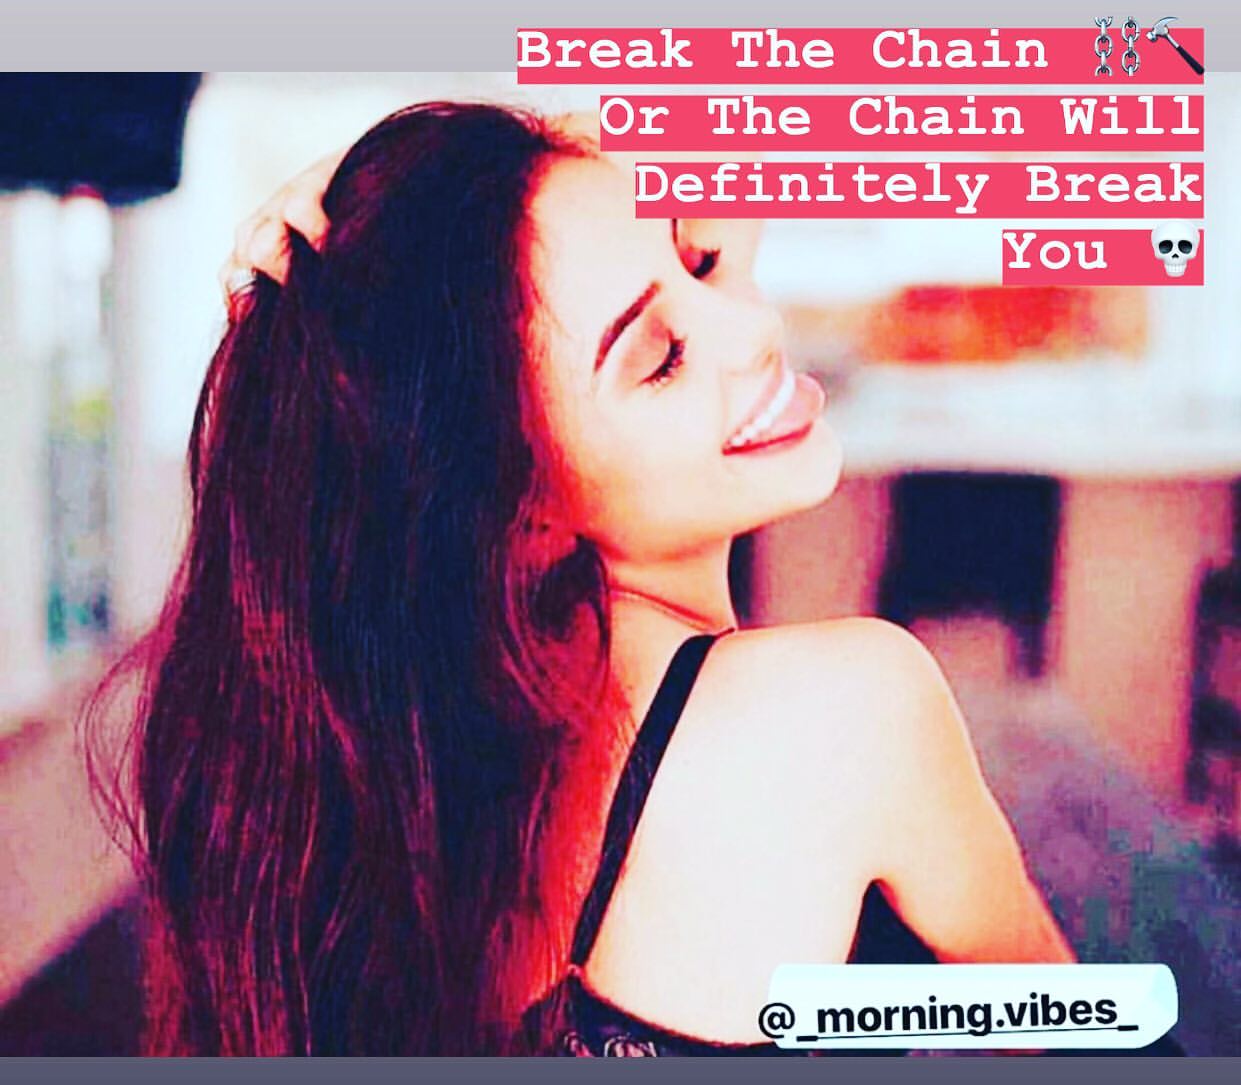 Break the chain or the chain will definitely break you.